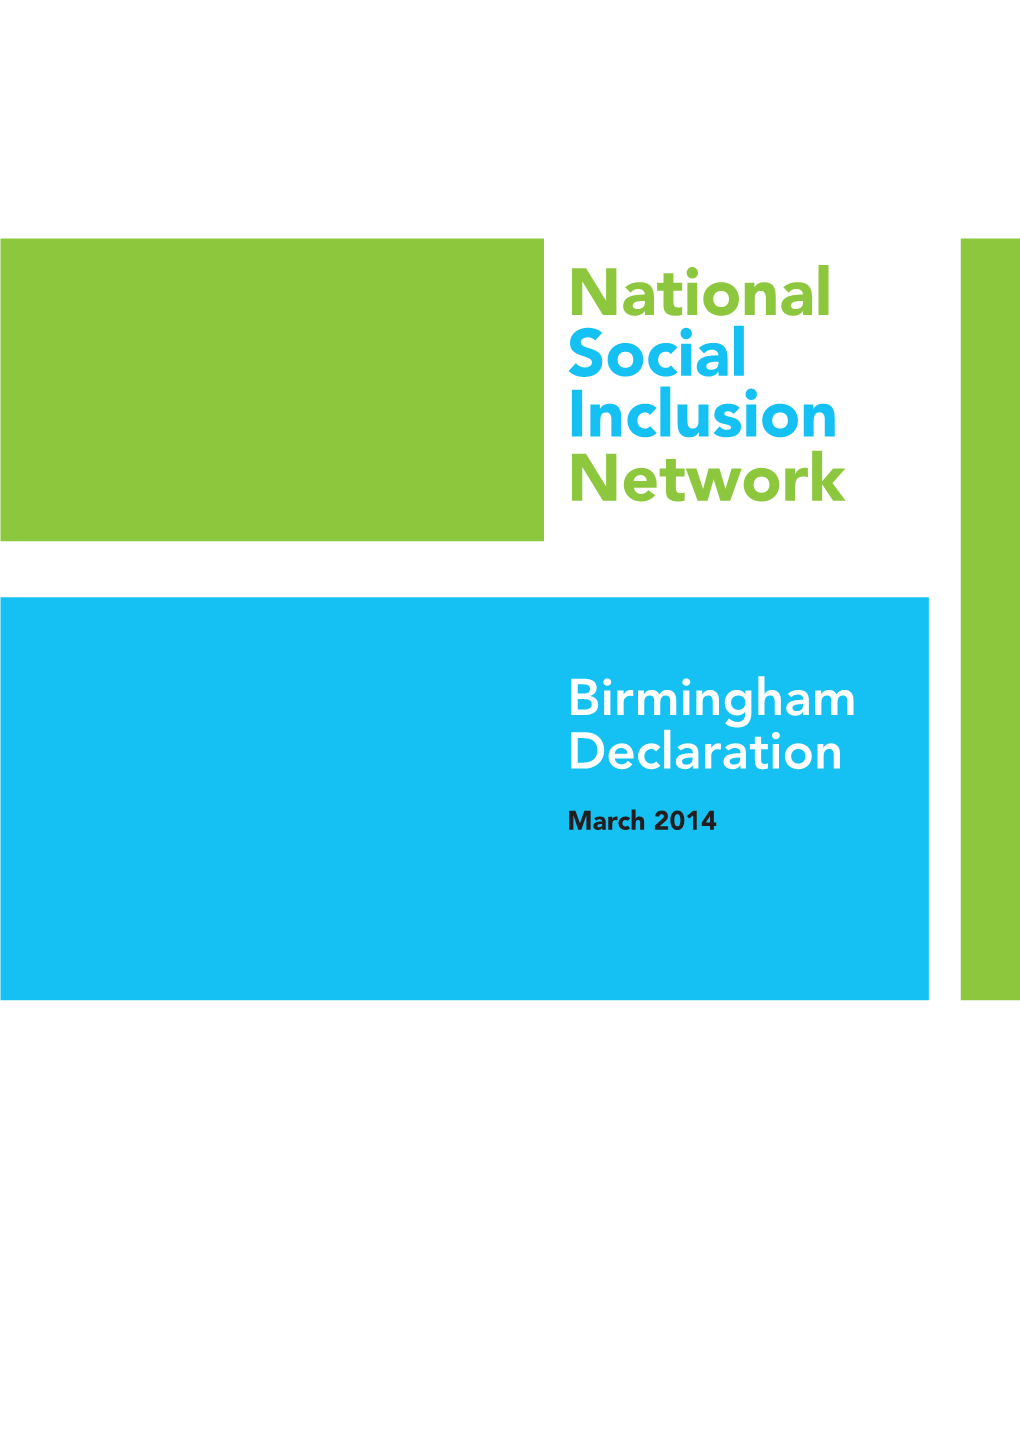 Birmingham Declaration on Social Inclusion